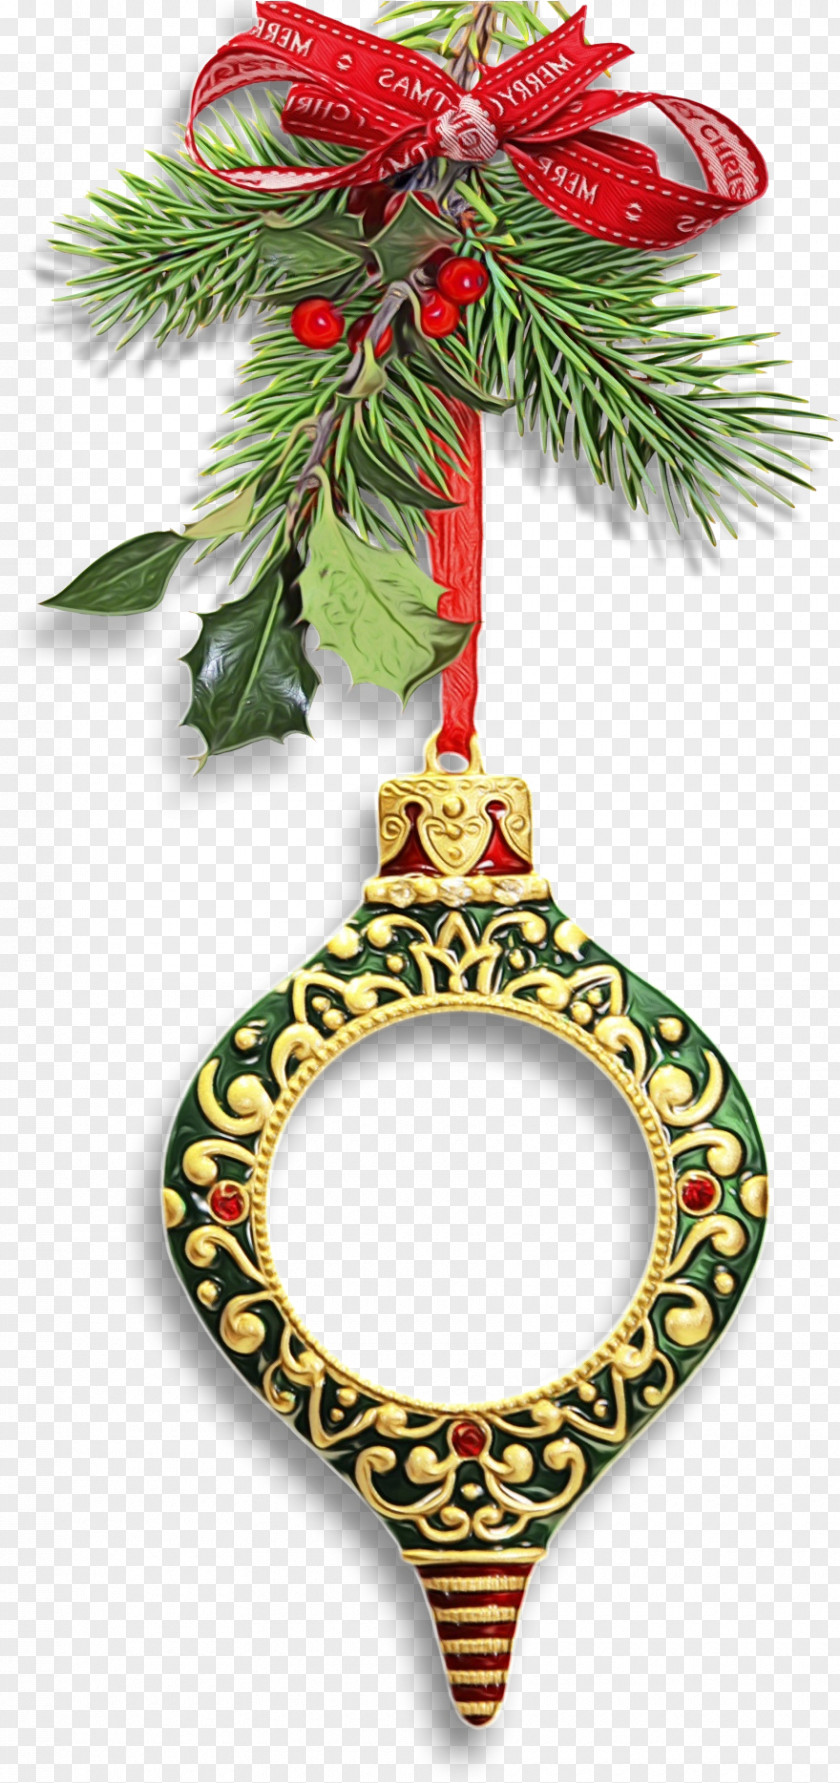 Pine Family Fir Christmas Ornament PNG